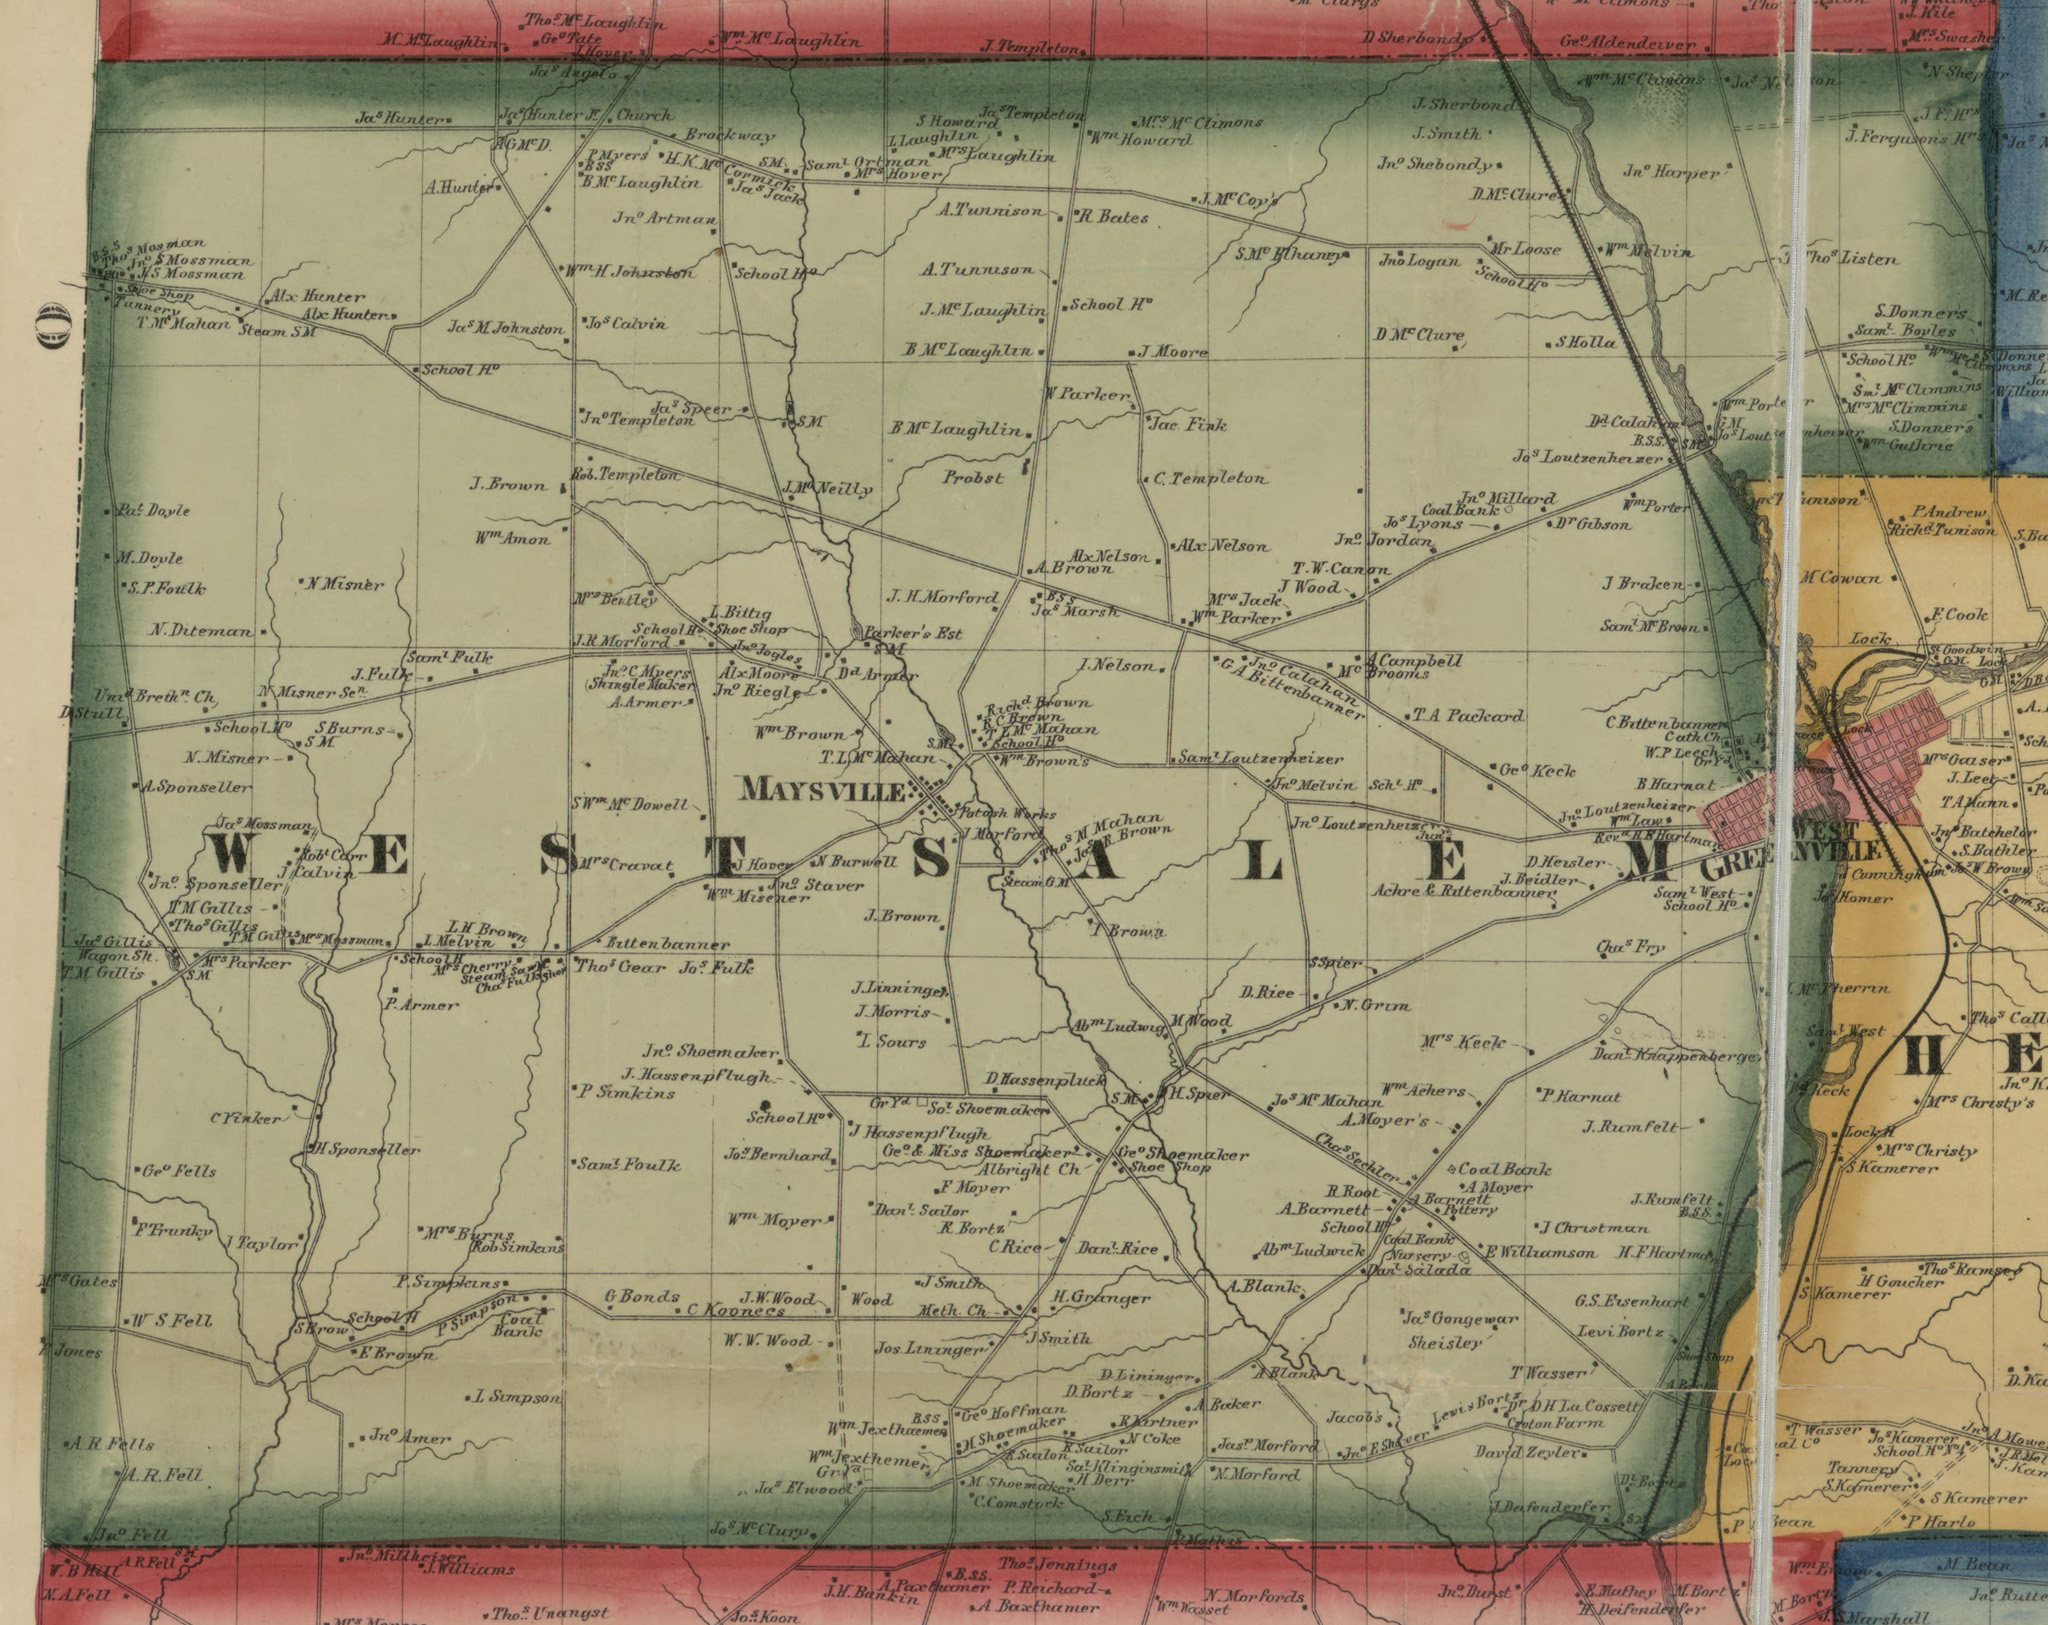 West Salem Township in 1860